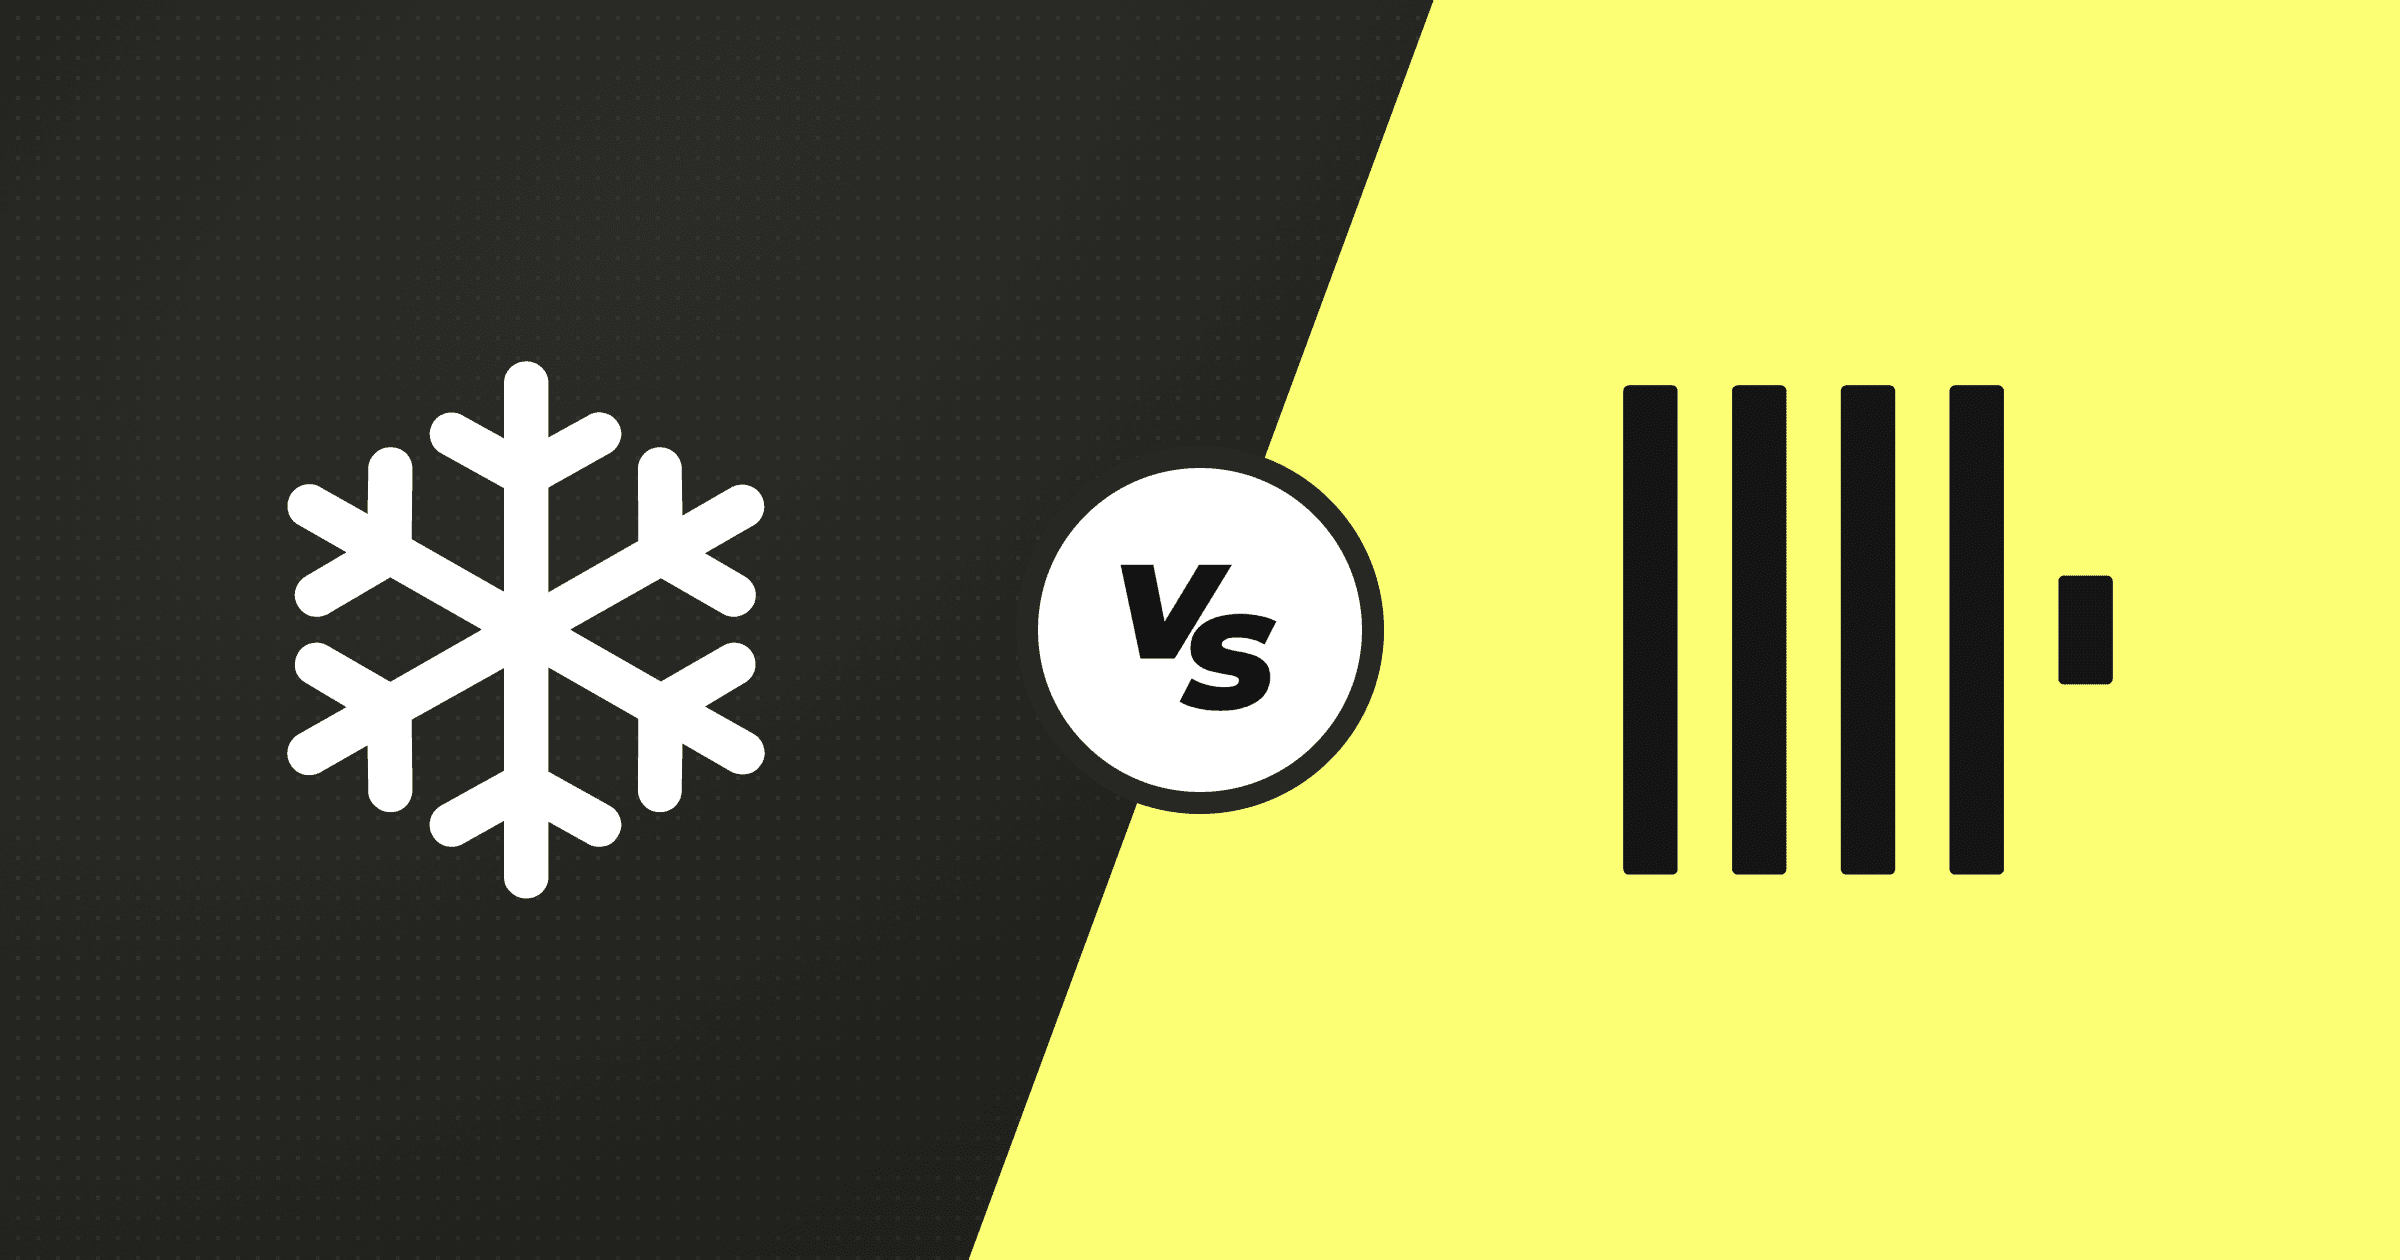 clickhouse_vs_snowflake_simple.png